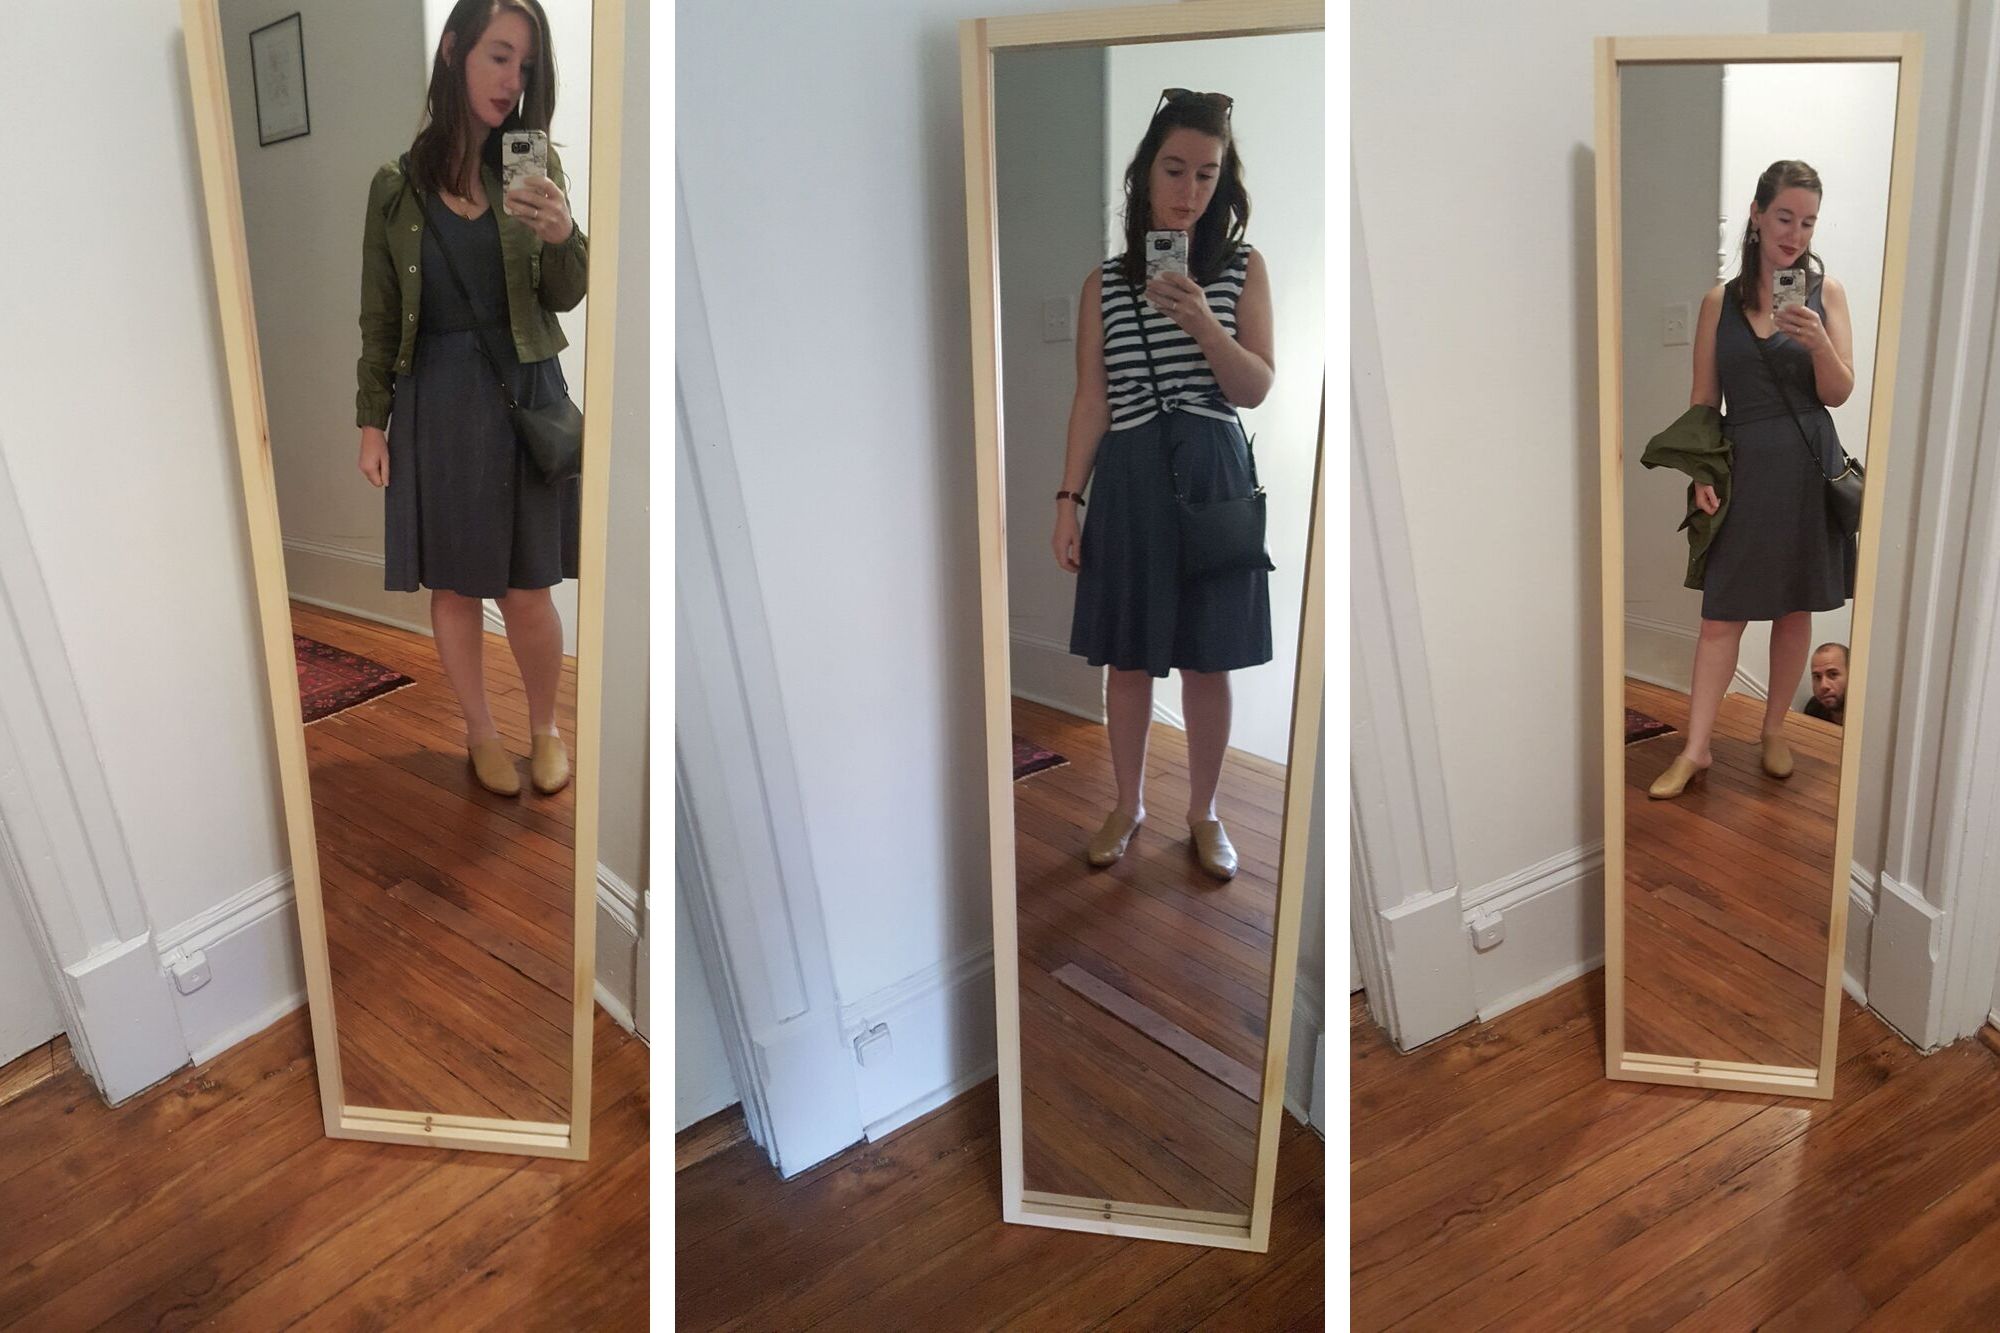 Three Mirror selfies of Alyssa in a wool& dress